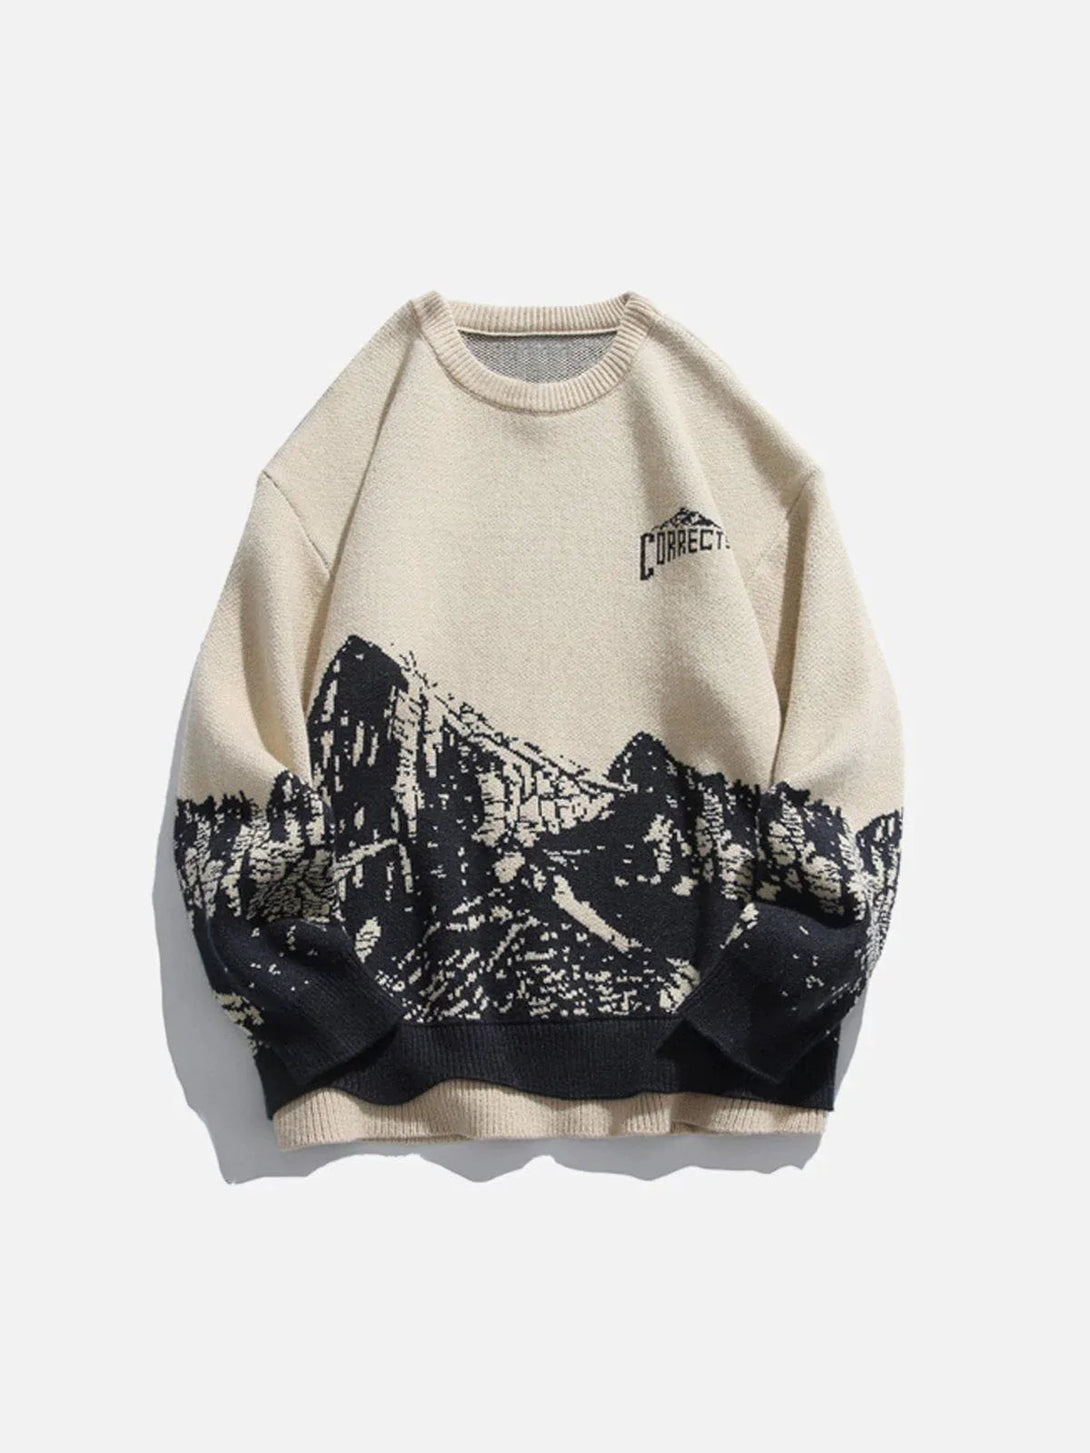 Majesda® - Mountains Knit Sweater outfit ideas streetwear fashion